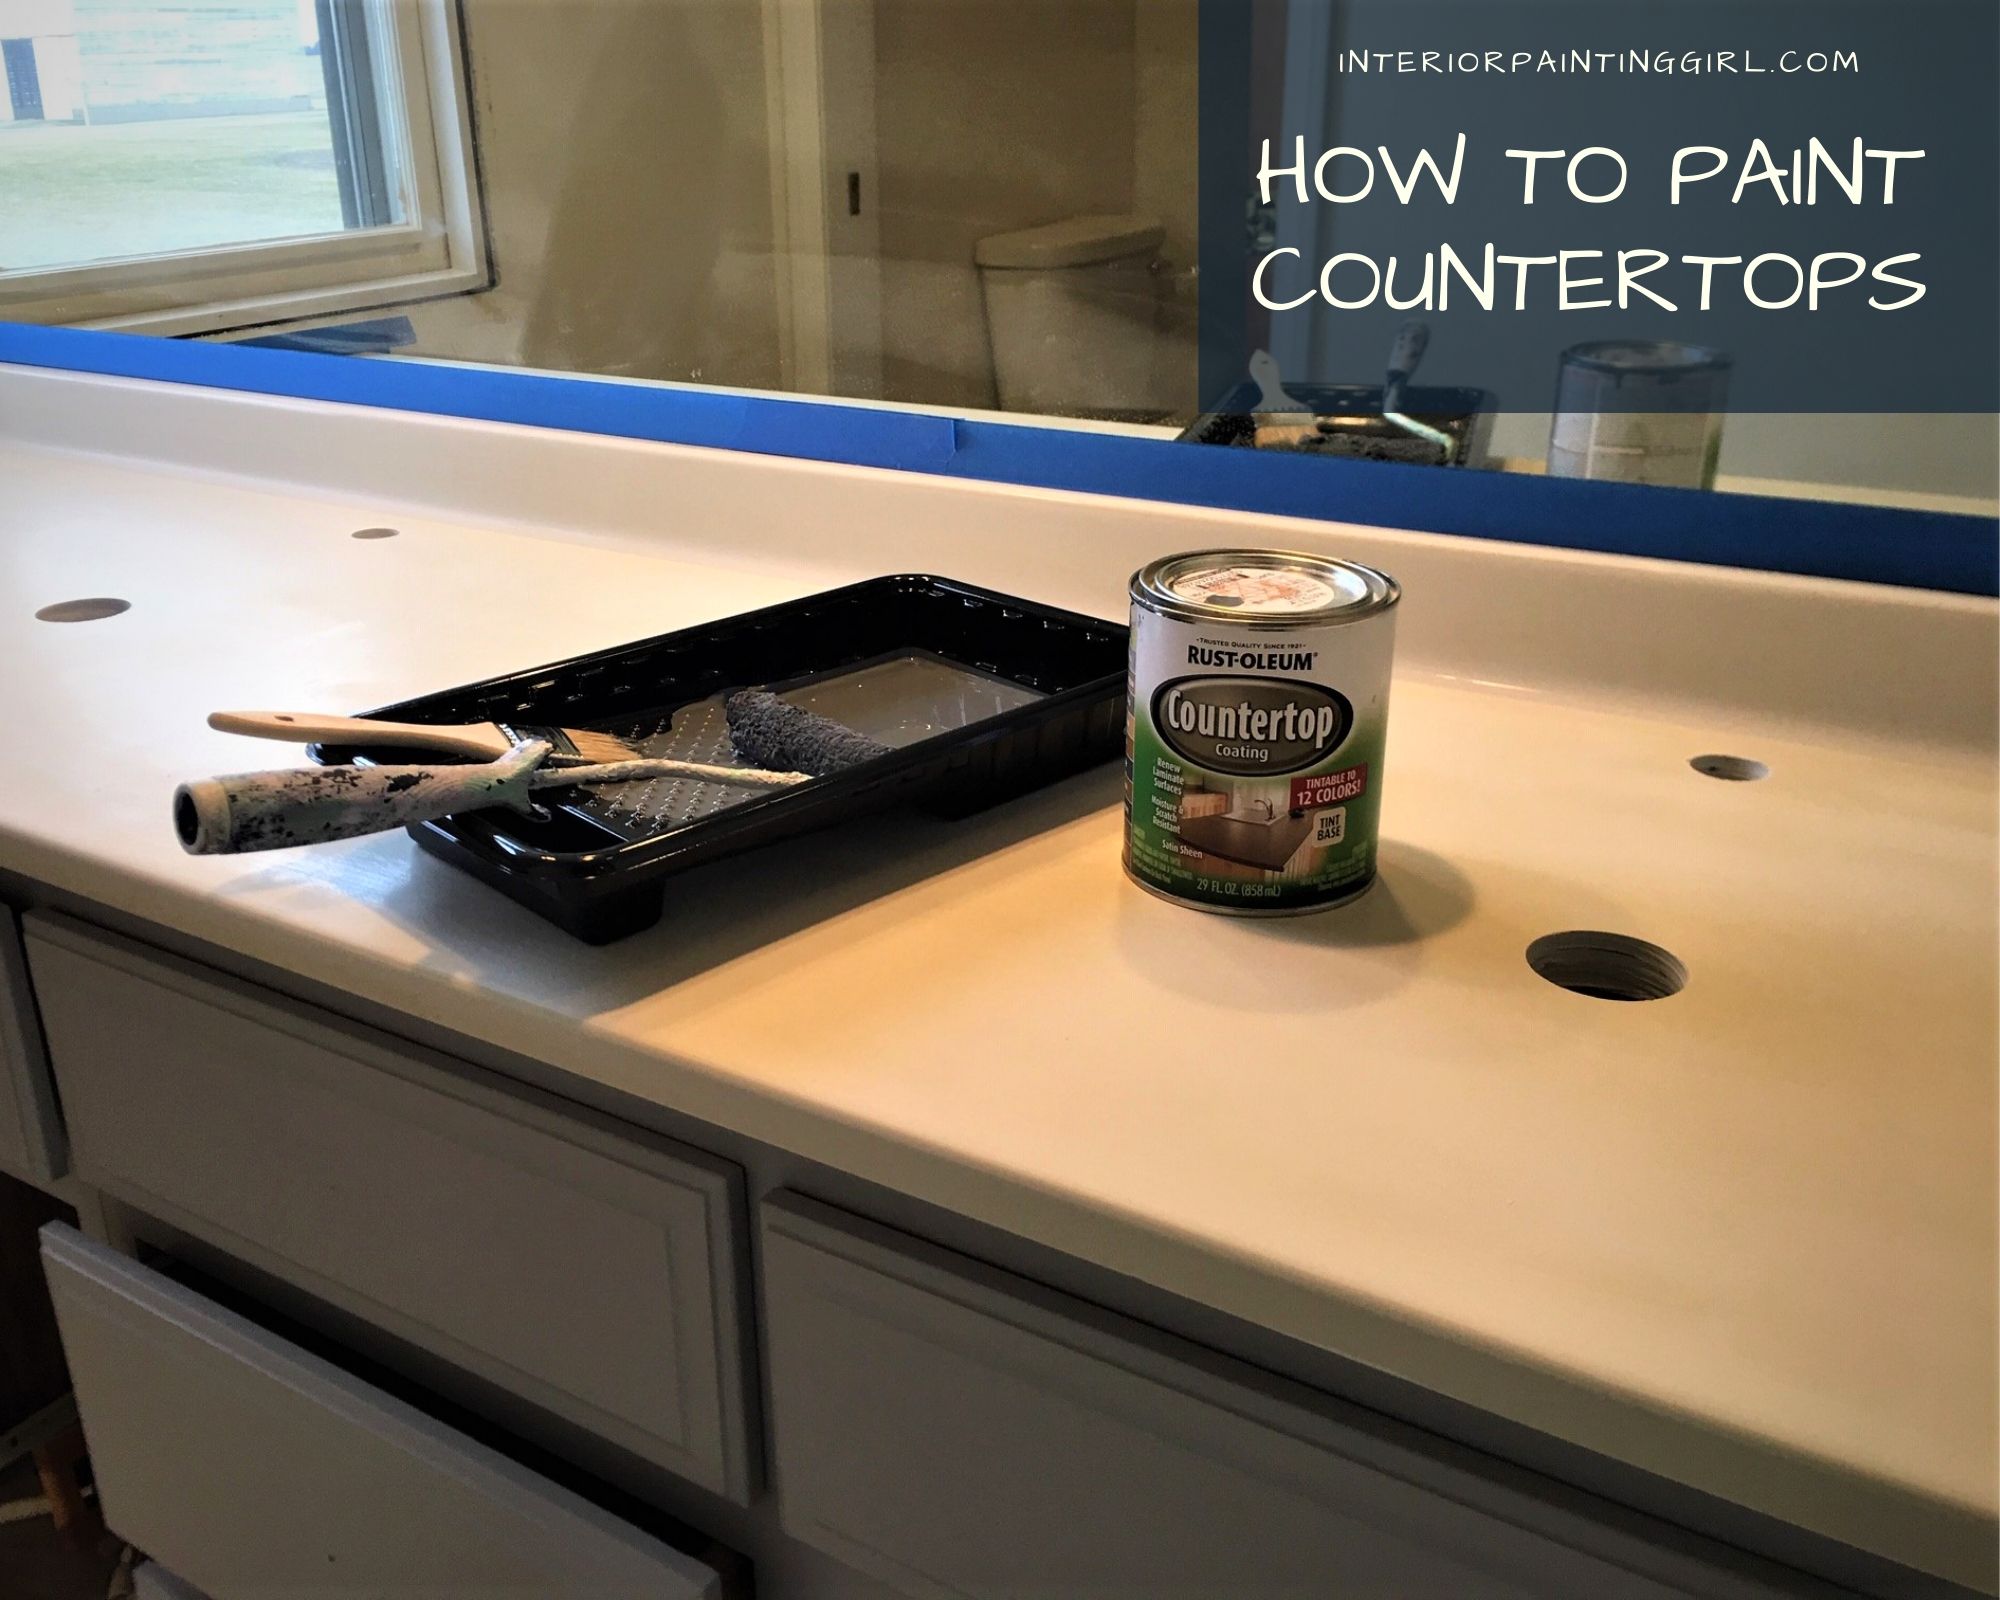 How To Paint Countertops, Rustoleum Countertop Paint Color Choices